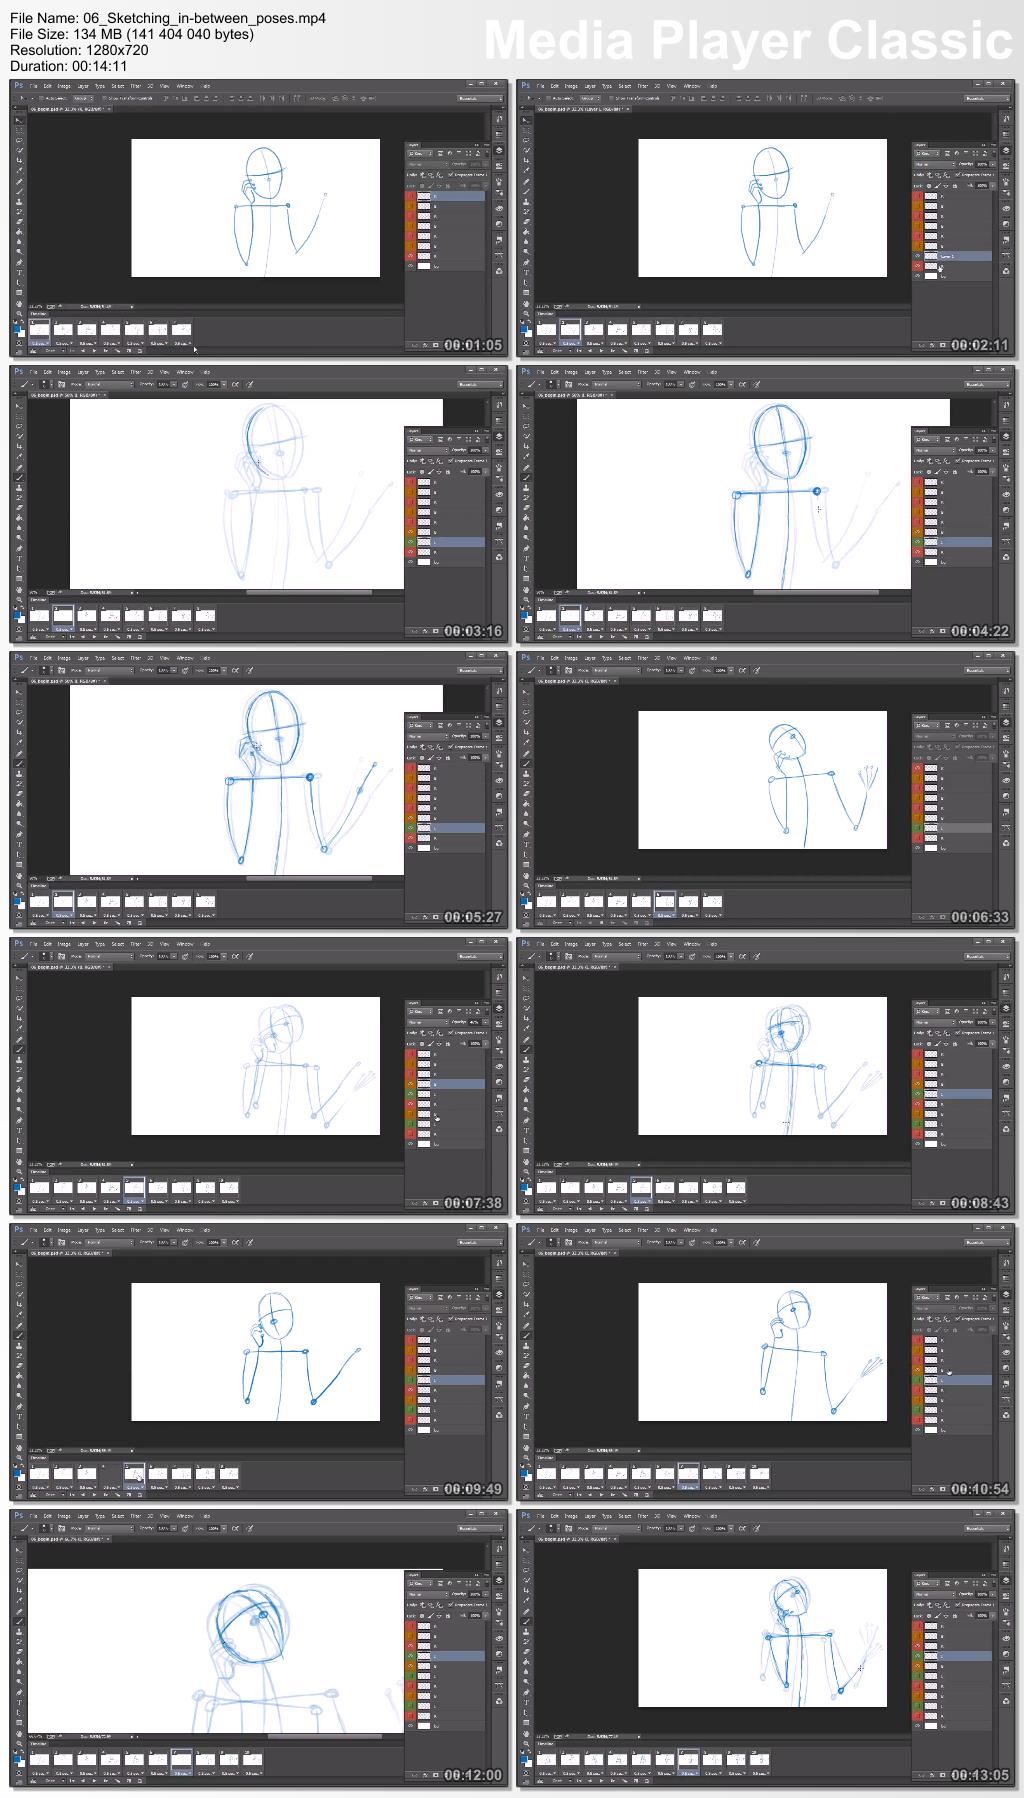 Dixxl Tuxxs - Traditional Animation Techniques in Photoshop